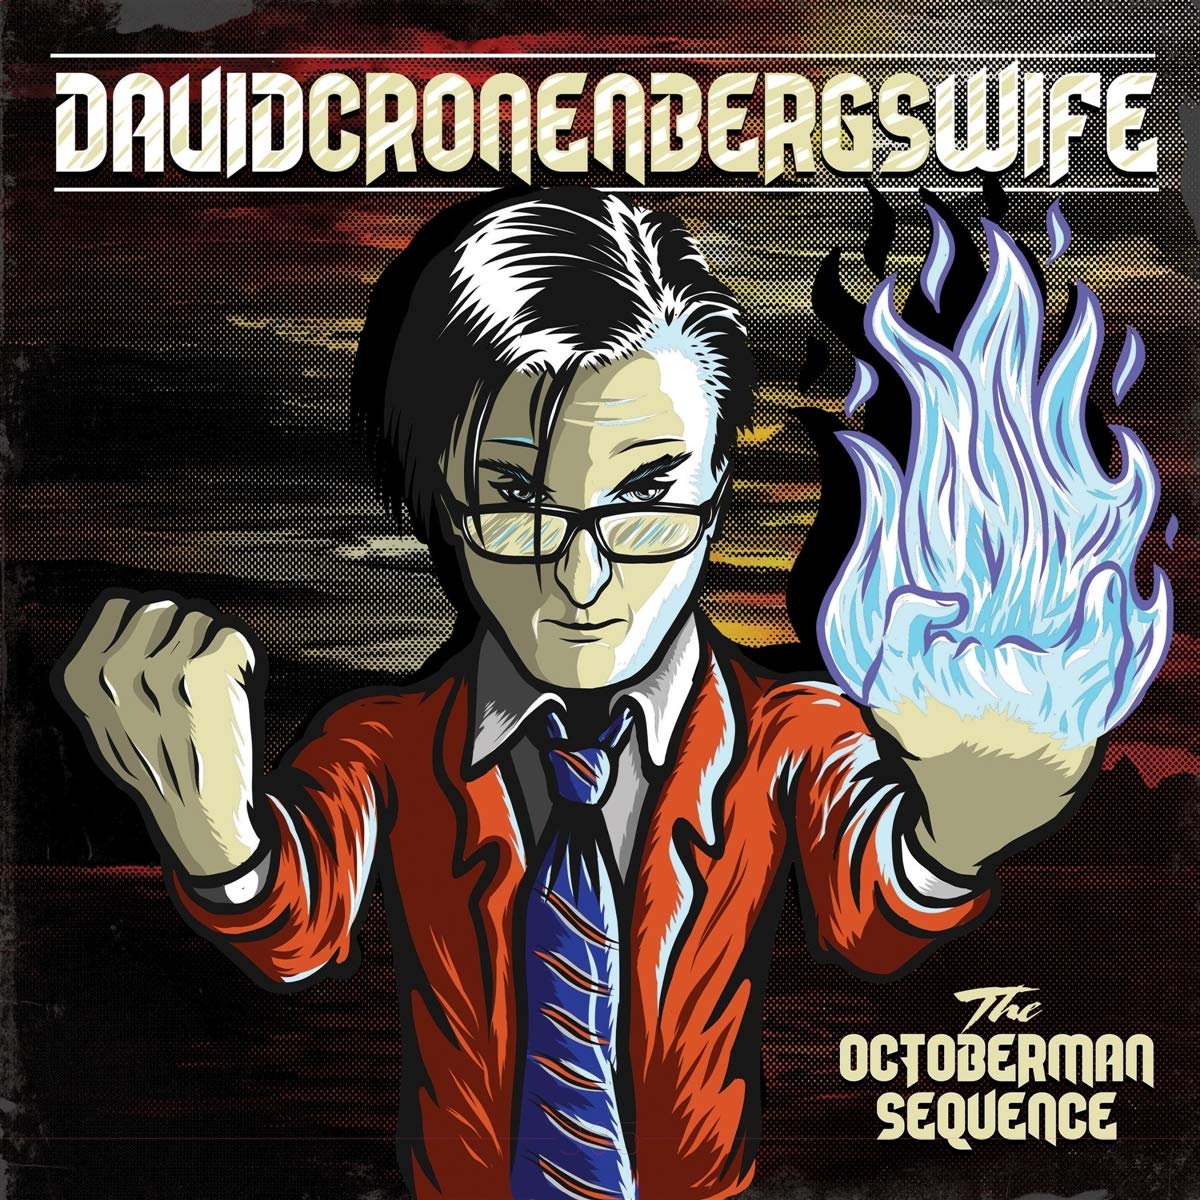 David Cronenberg's Wife - Octoberman Sequence vinyl cover